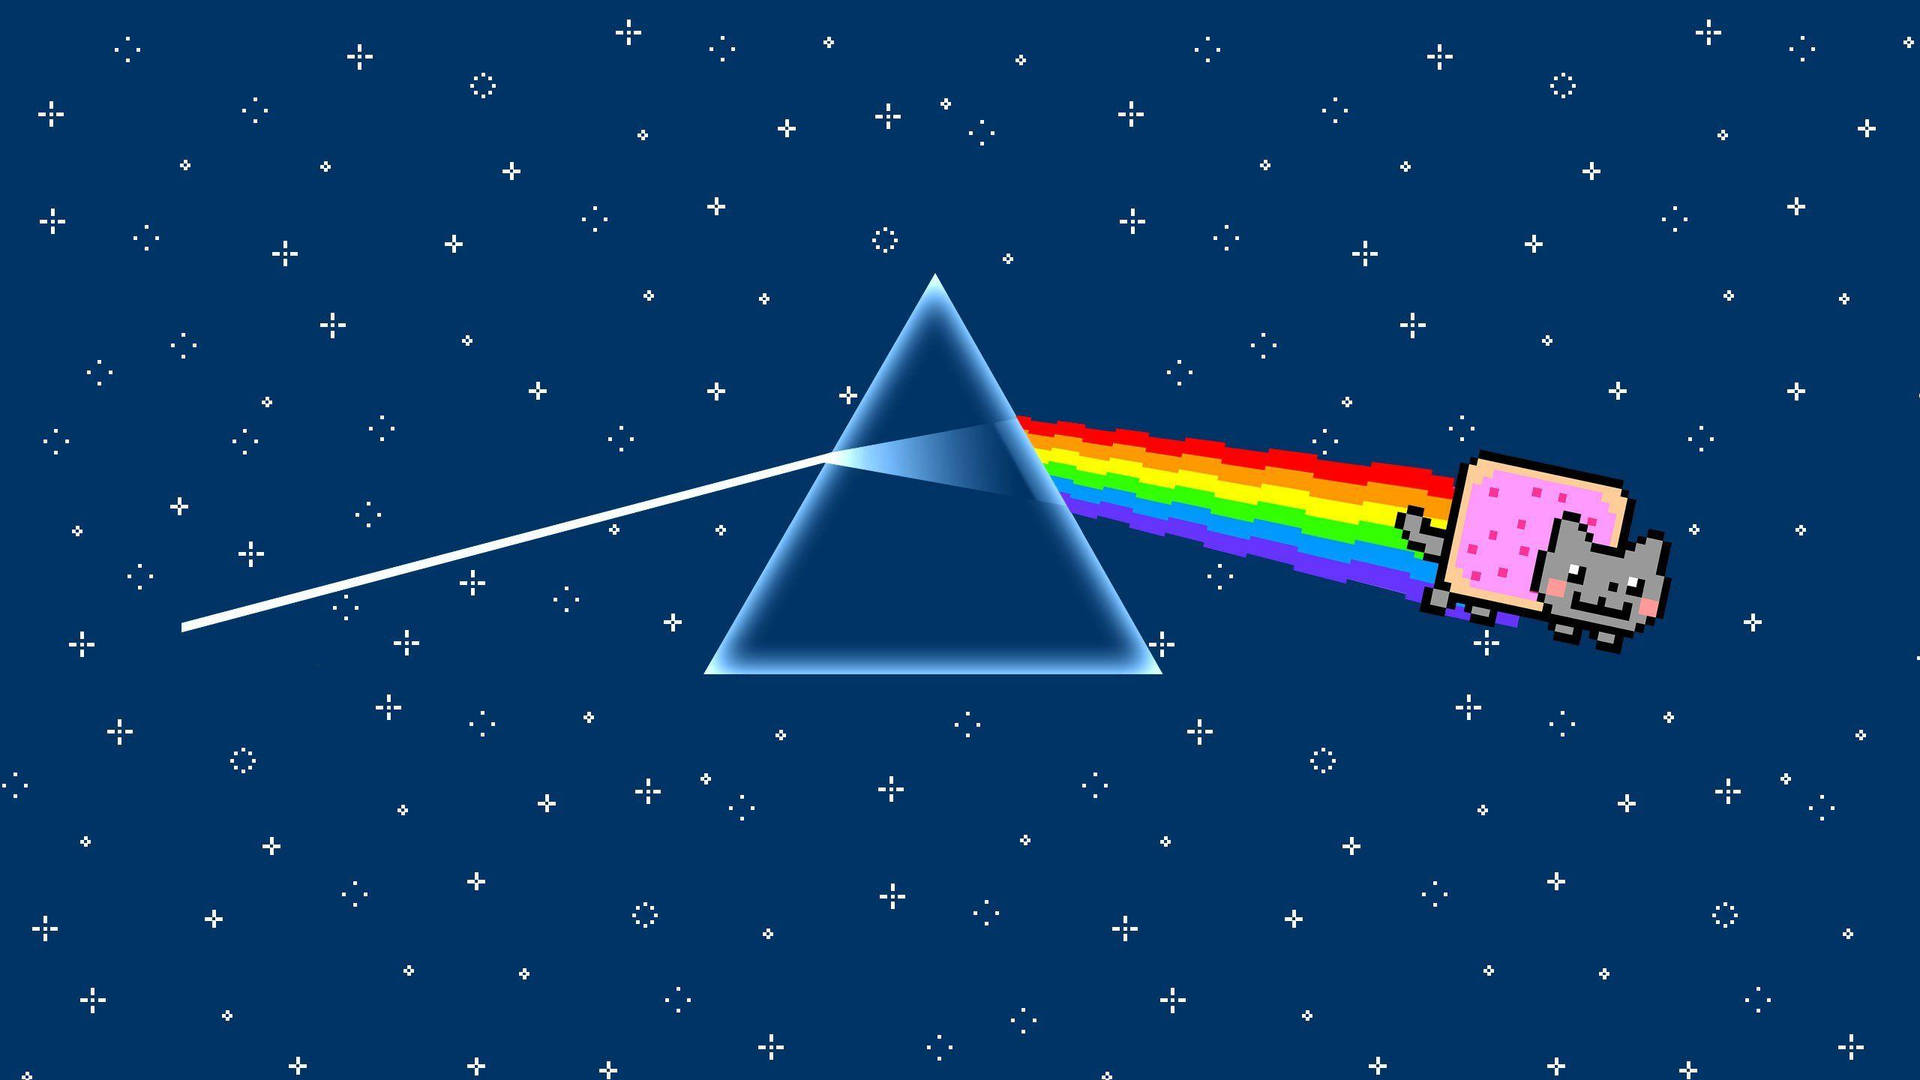 Nyan Cat Prism Wallpaper